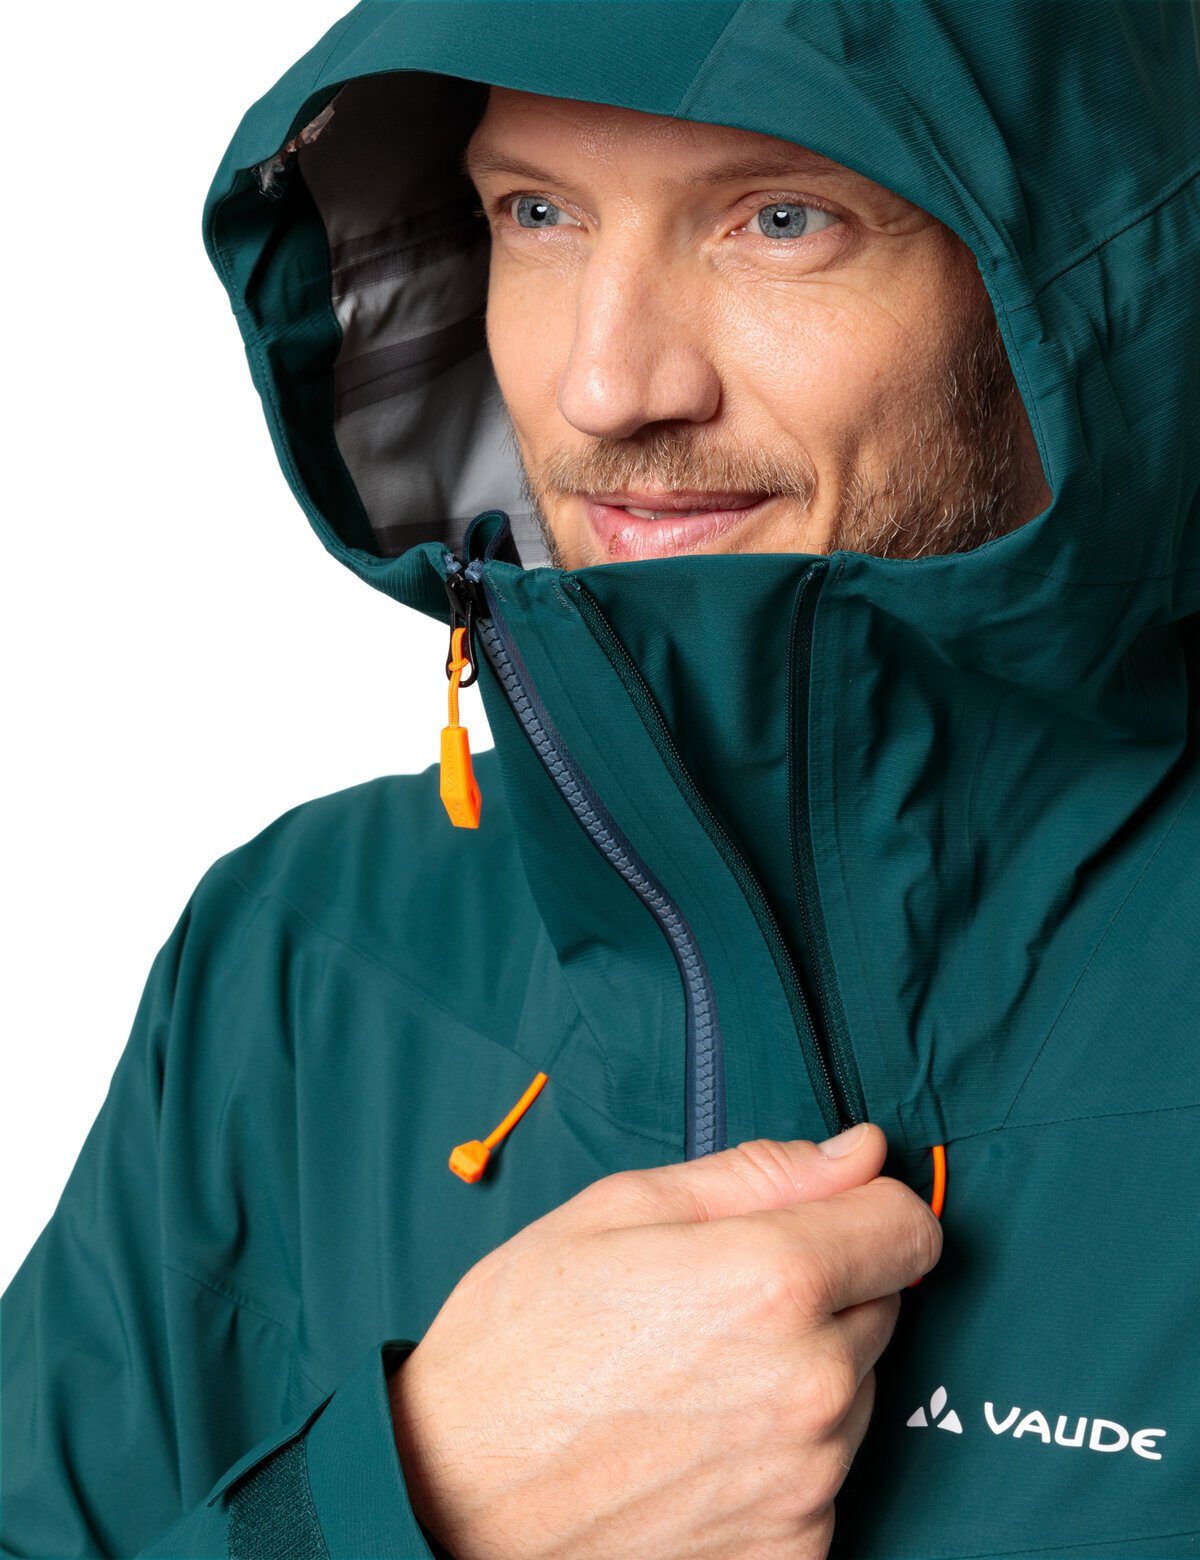 Monviso (1-St) Jacket green 3L Klimaneutral mallard Men's kompensiert VAUDE Outdoorjacke